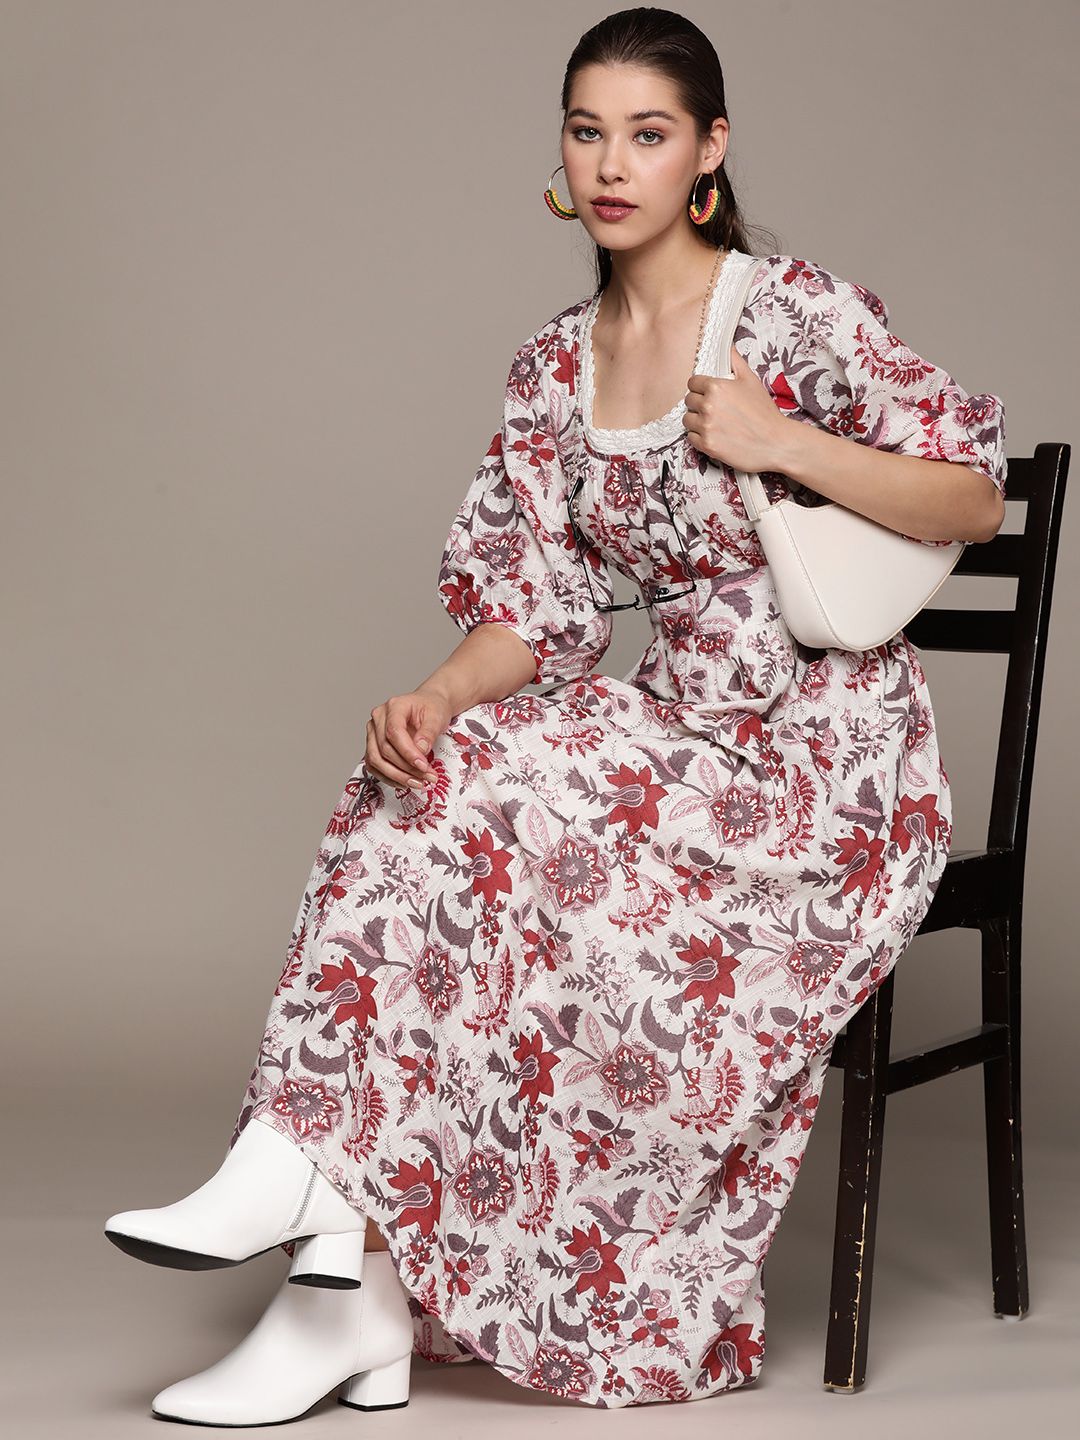 aarke Ritu Kumar Off White Floral A-Line Maxi Dress Price in India